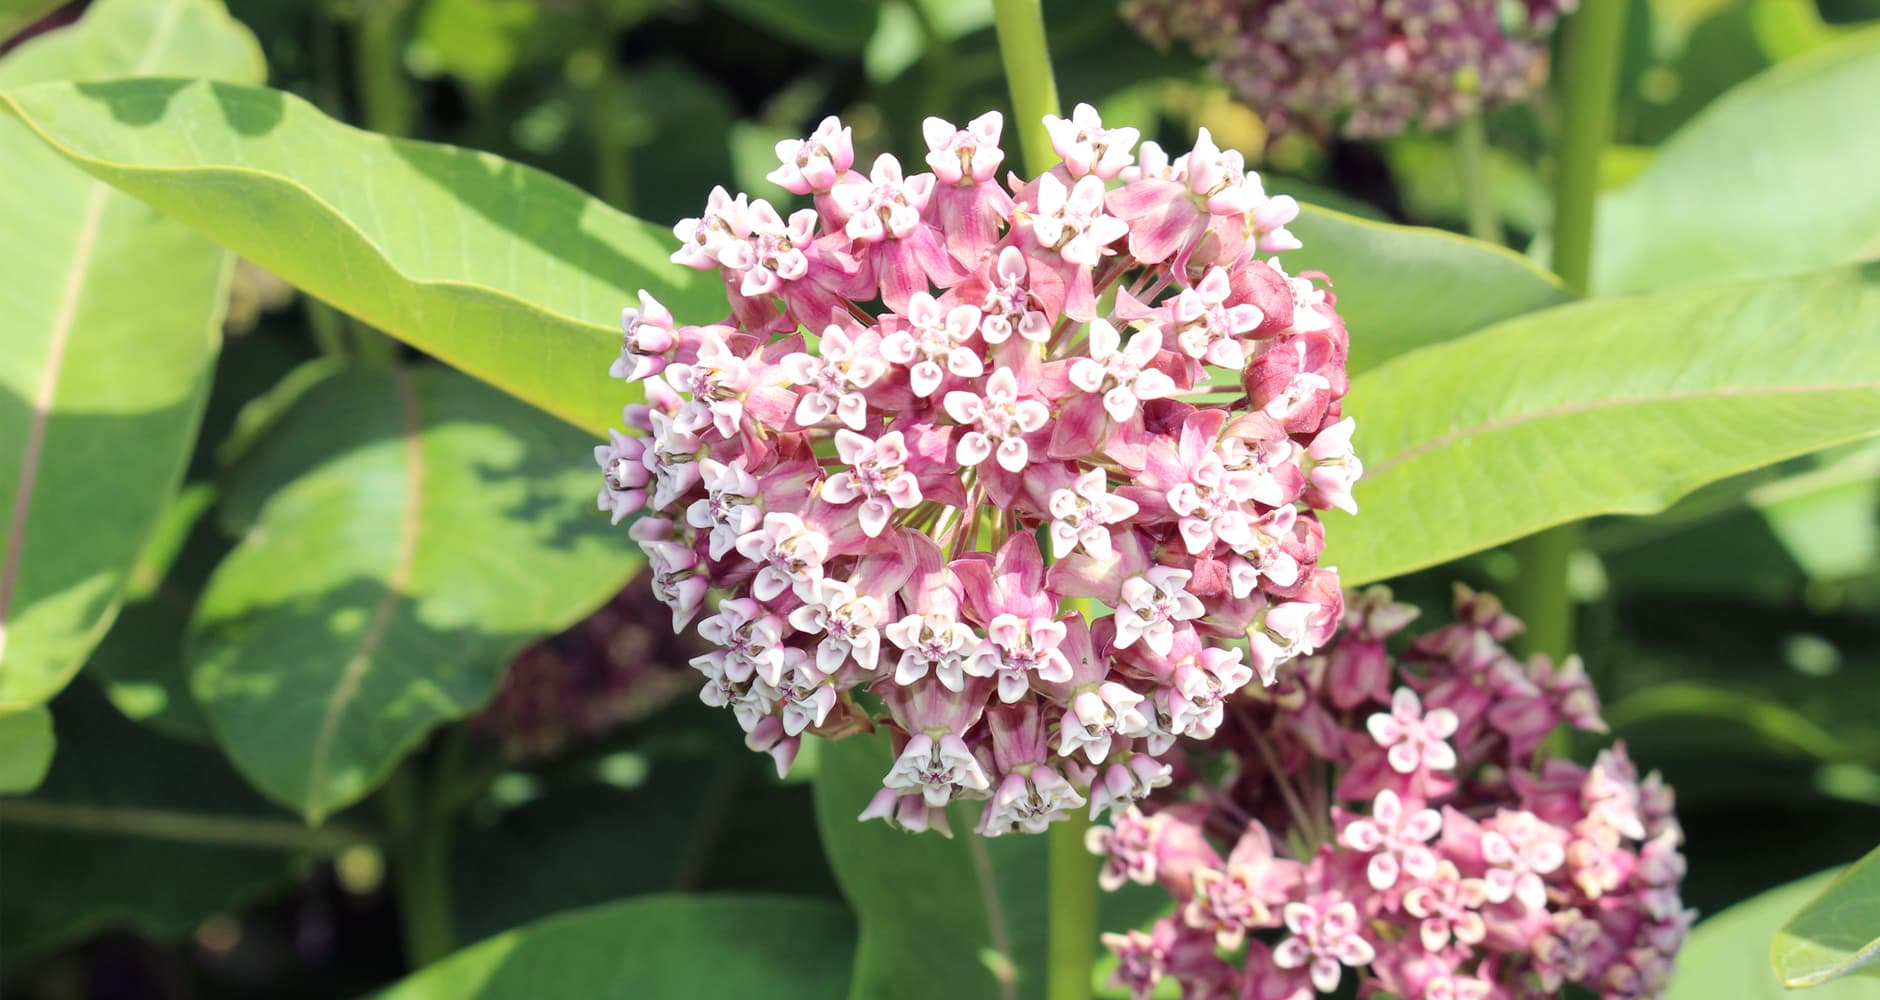 Flowering plant - Common milkweed